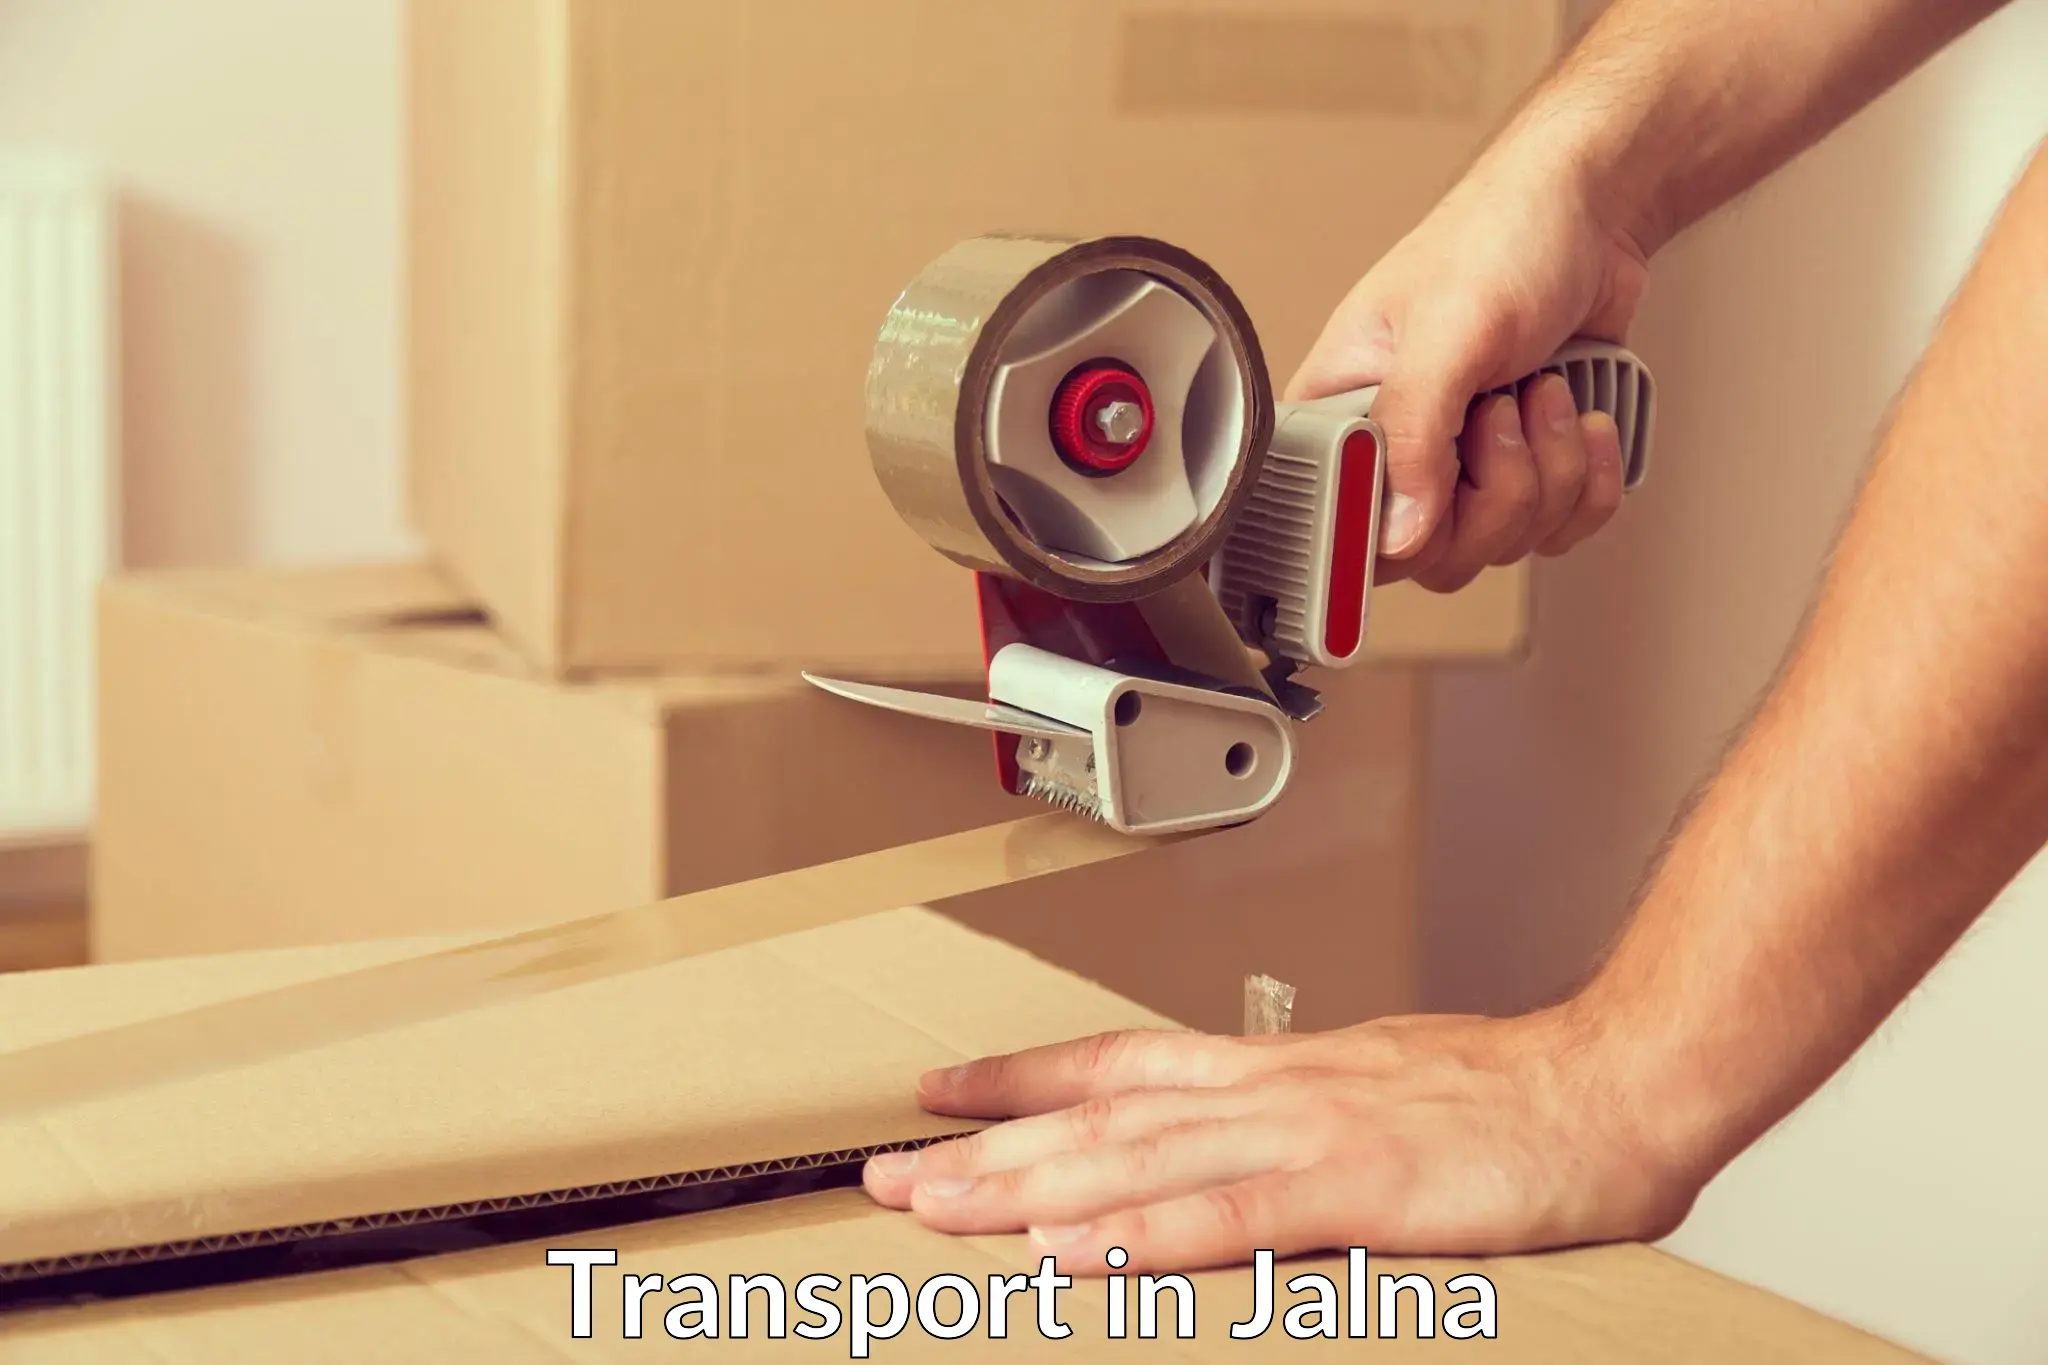 Domestic goods transportation services in Jalna